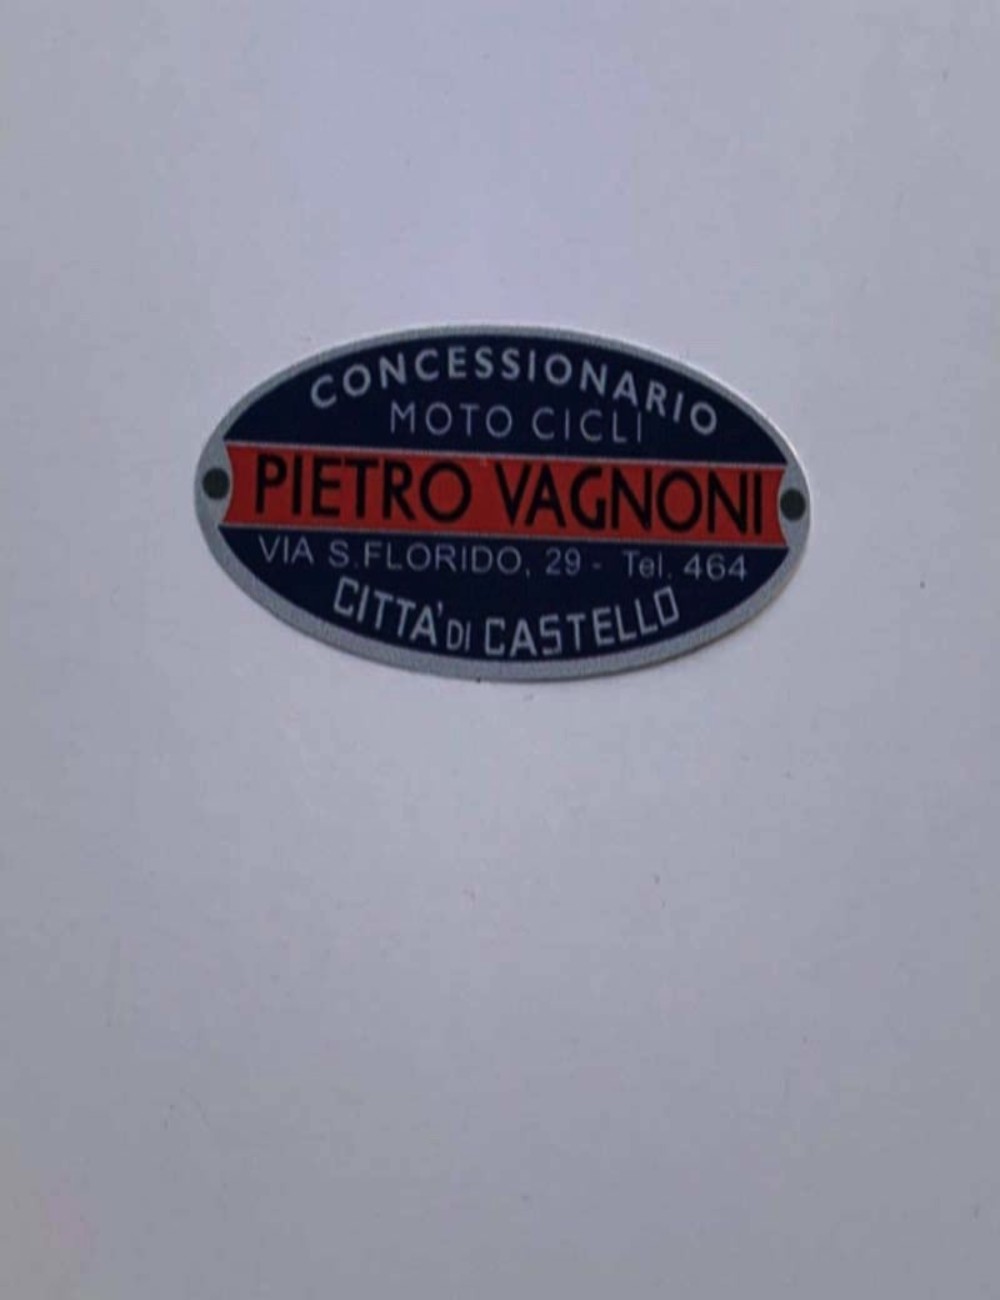 Adesivo concessionario Pietro Vagnoni. Dimensioni: 5cm x 2,8 cm